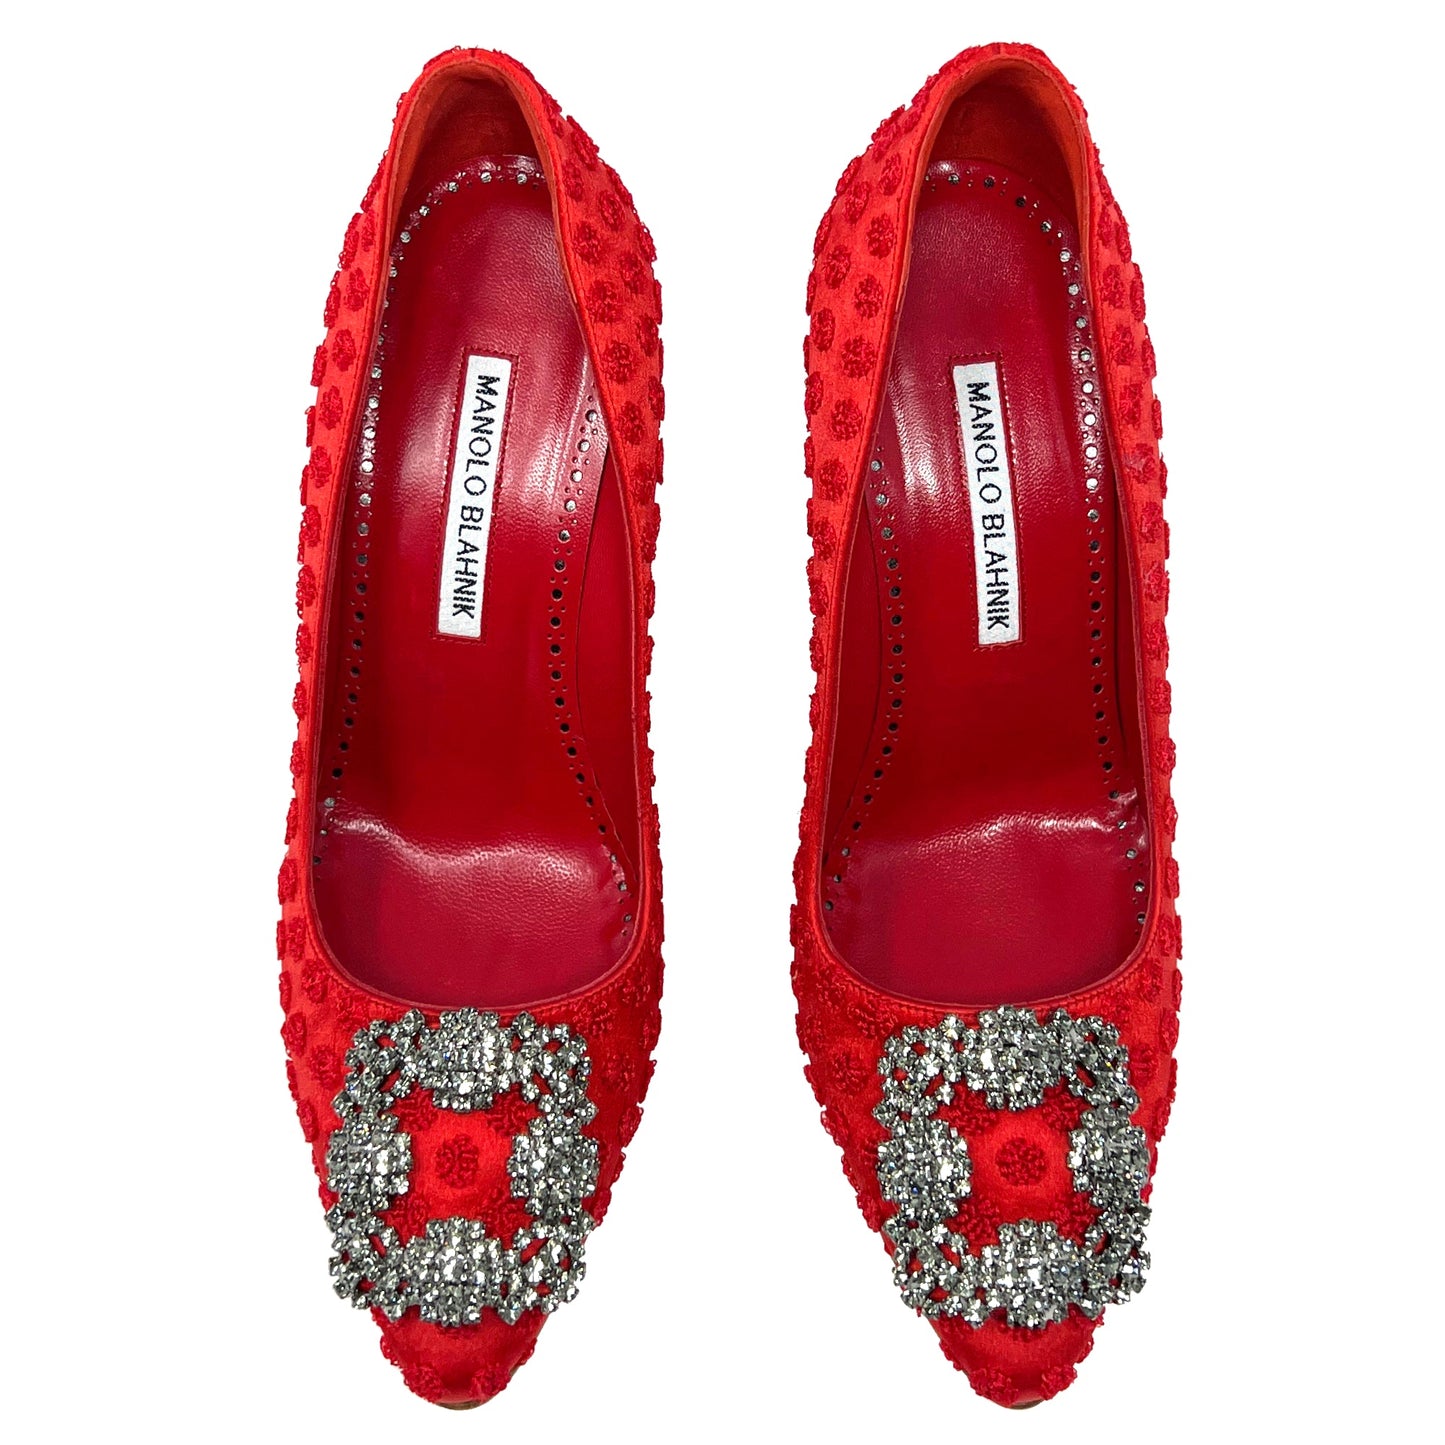 Manolo Blahnik Red Textured Satin Hangisi Crystal Buckle Pointed Toe Heels Pumps